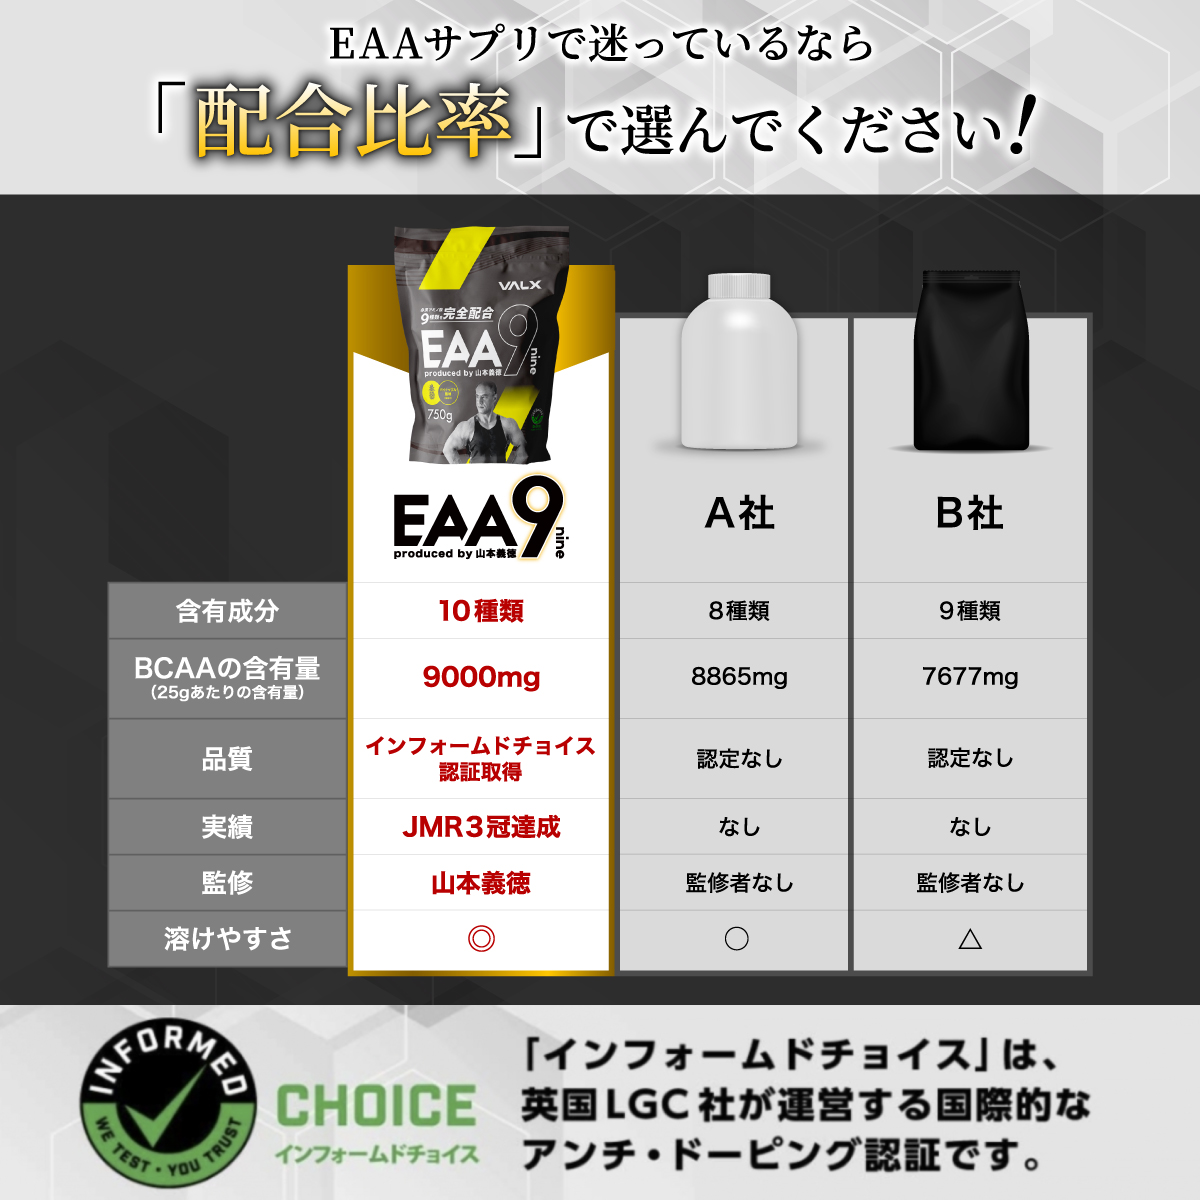 VALX バルクス EAA9 750g EAA 配合 送料無料 男性 サプリ ダイエット by ナイン 必須アミノ酸 女性 Produced